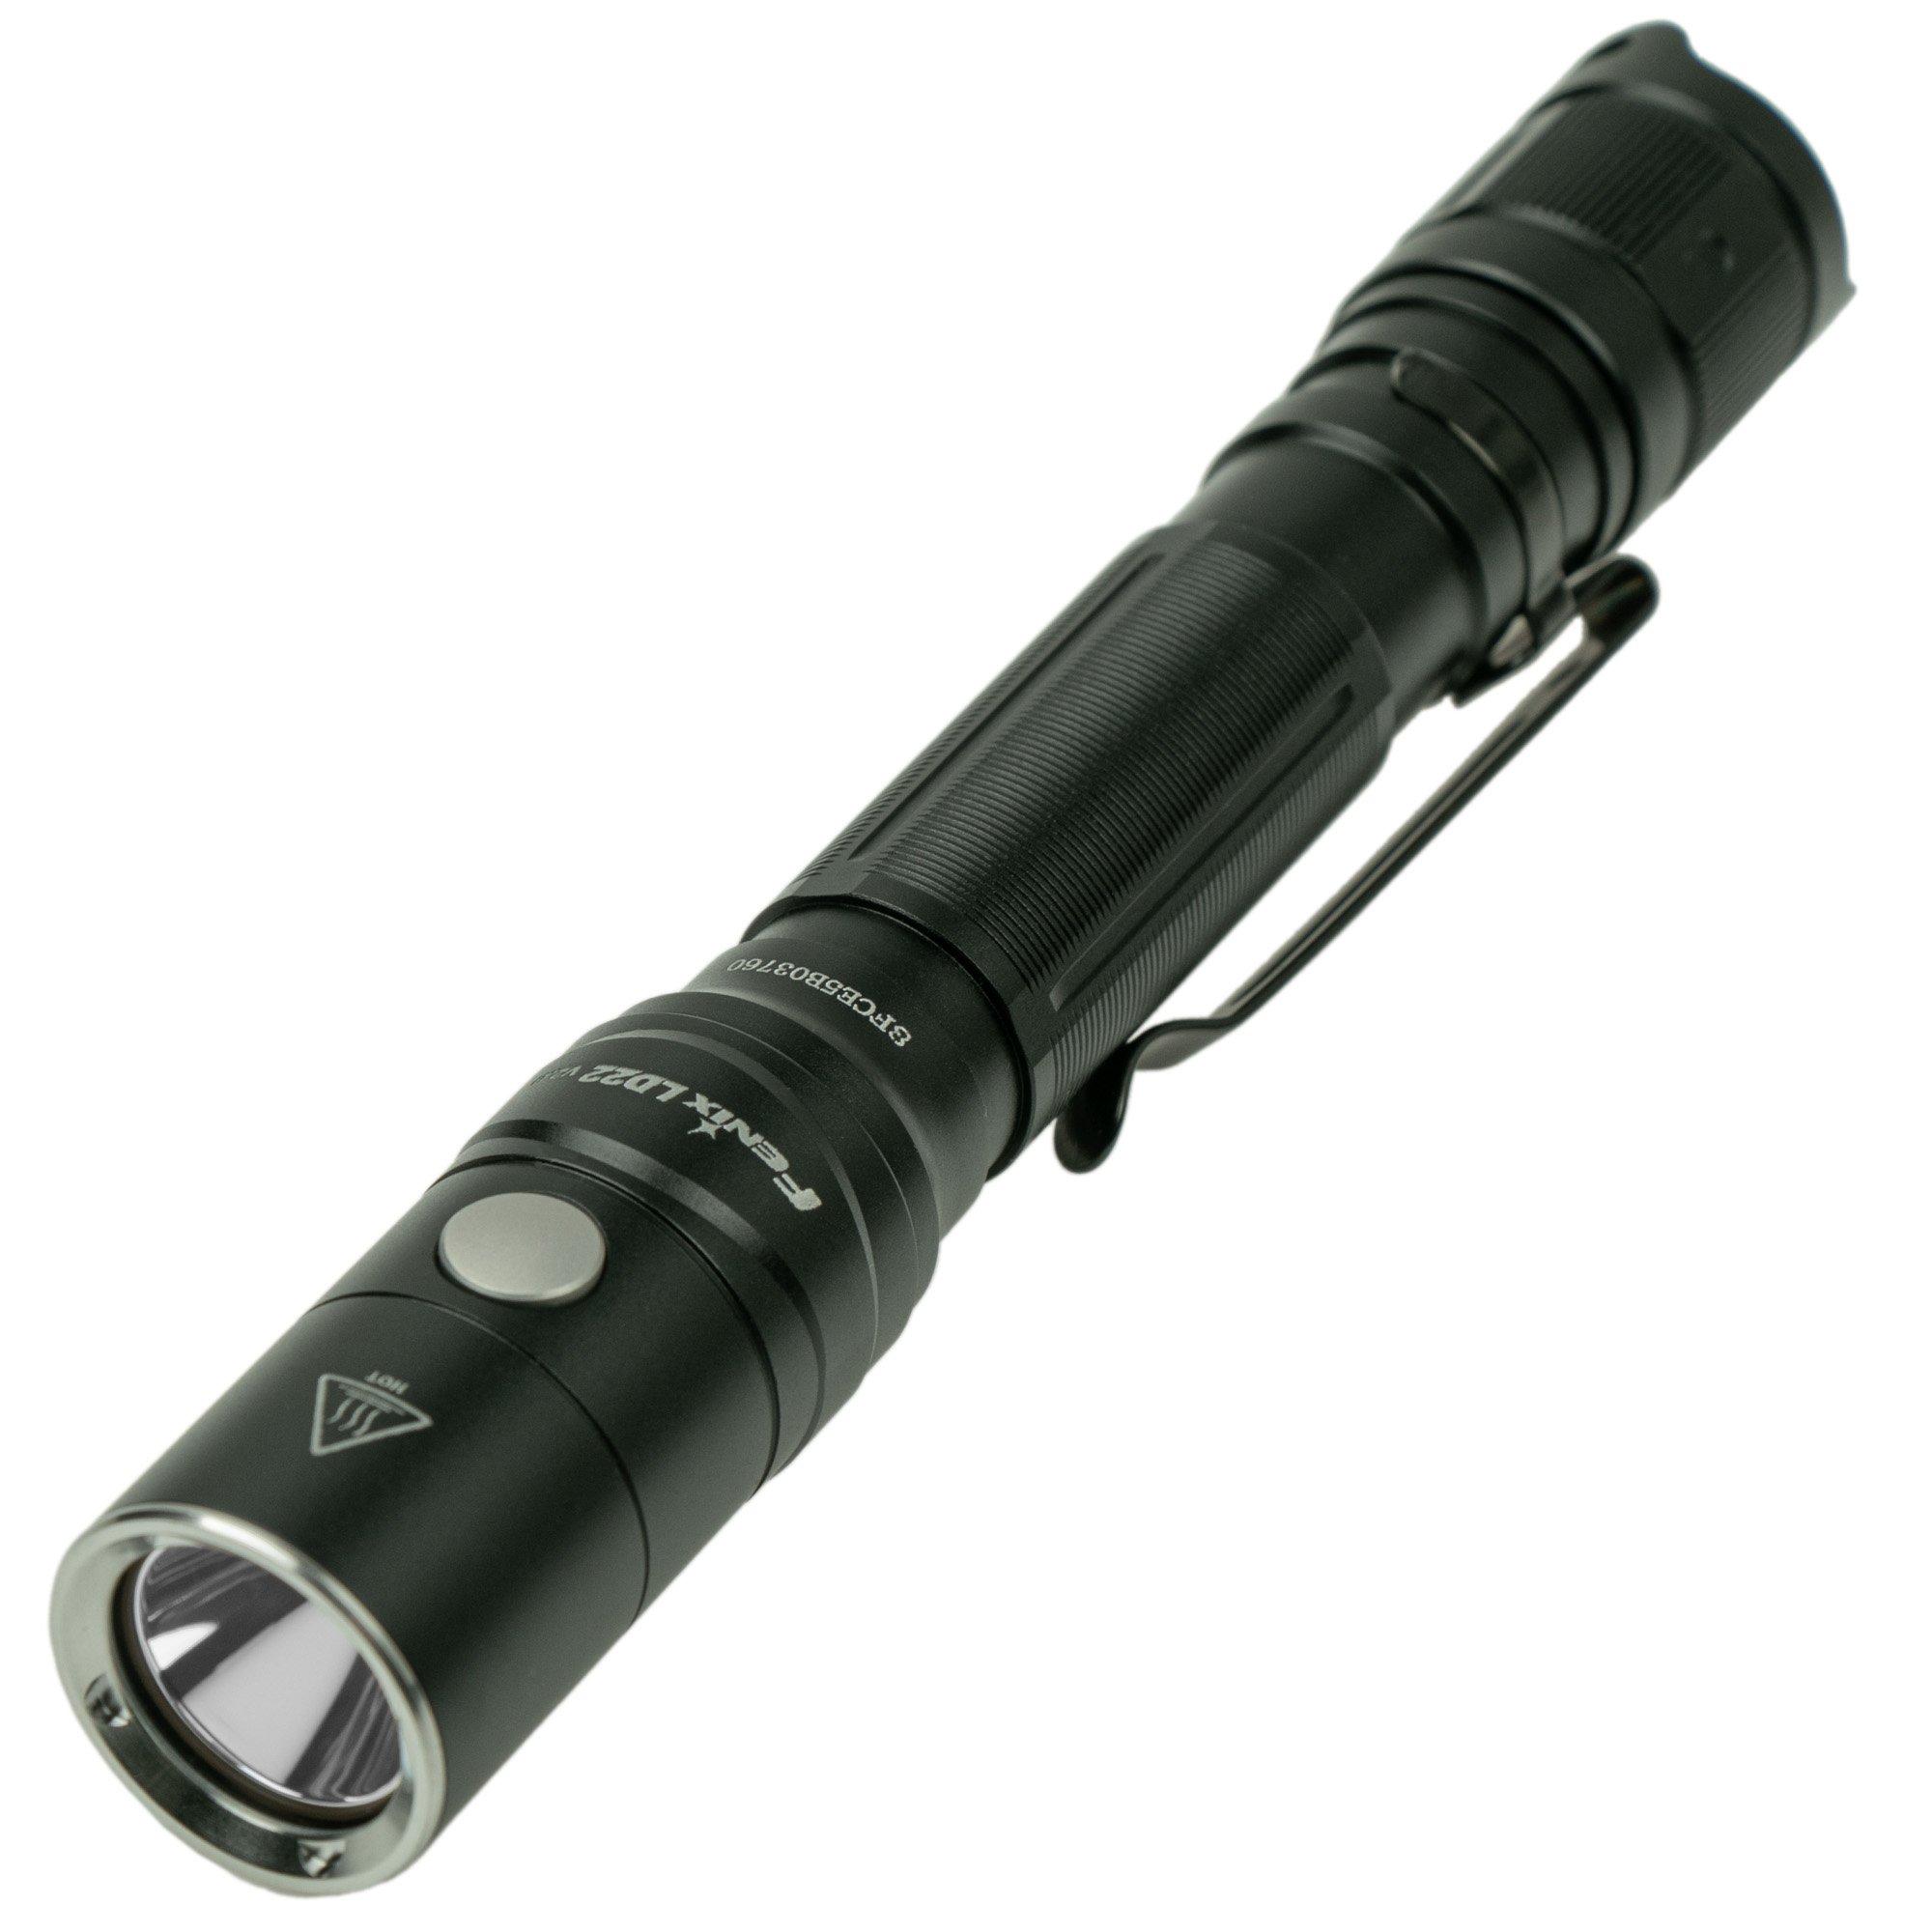 LED GI Flash Light Compact GI style Flashlight for Camping Hiking Military 